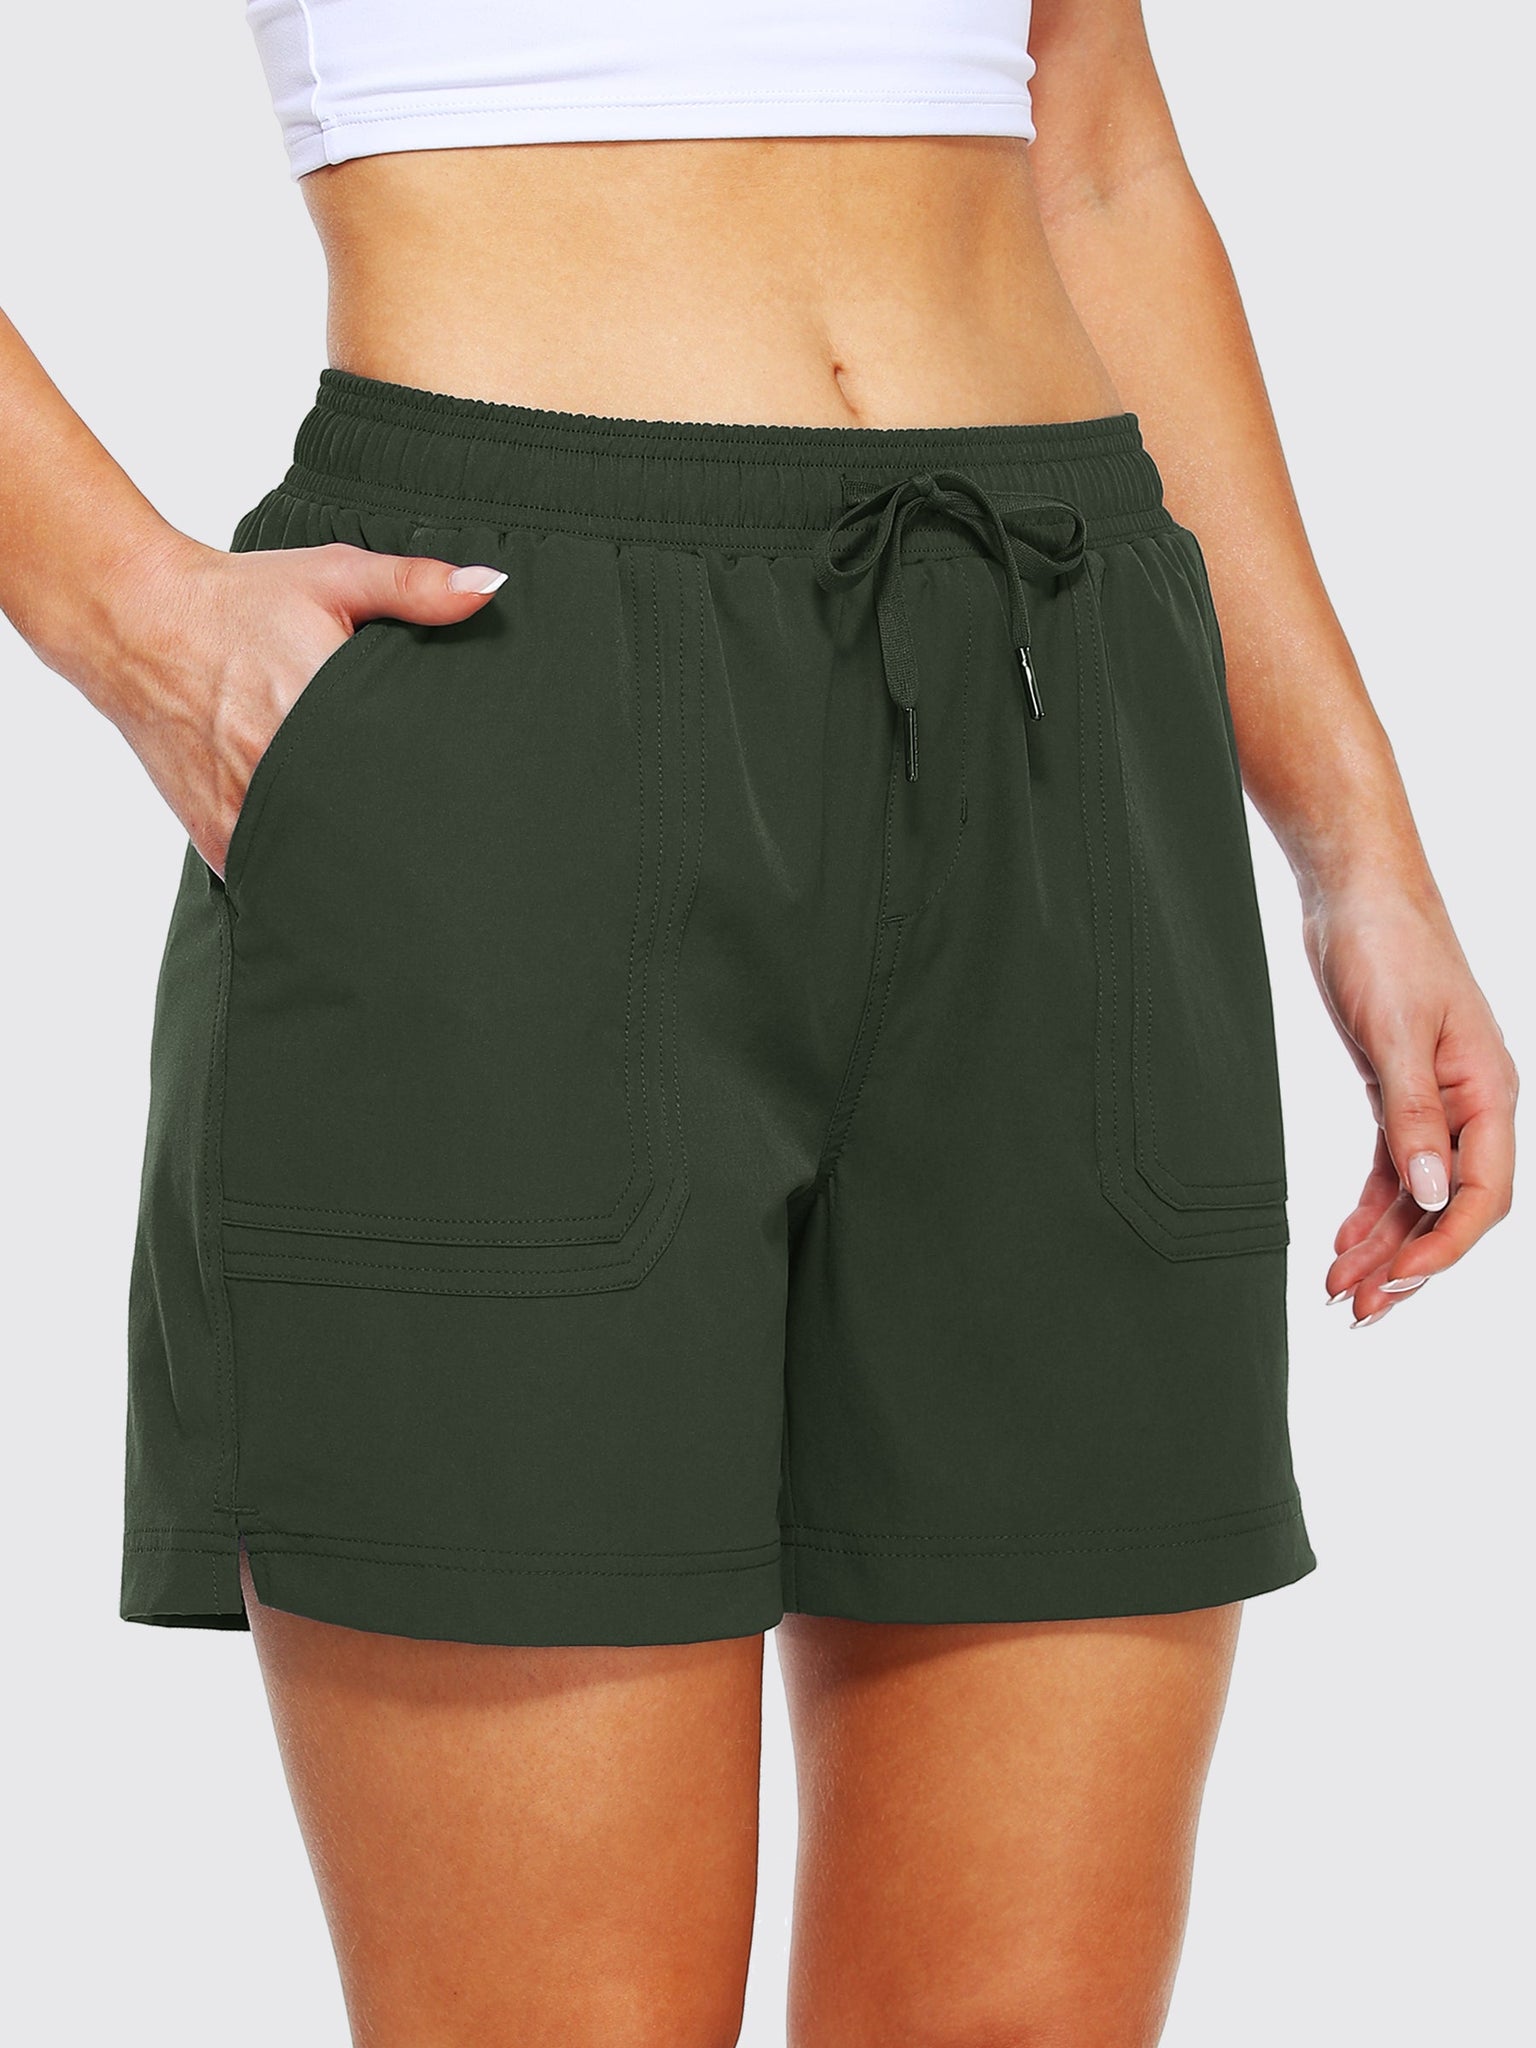 Willit Women's Hiking Golf Shorts_ArmyGreen1